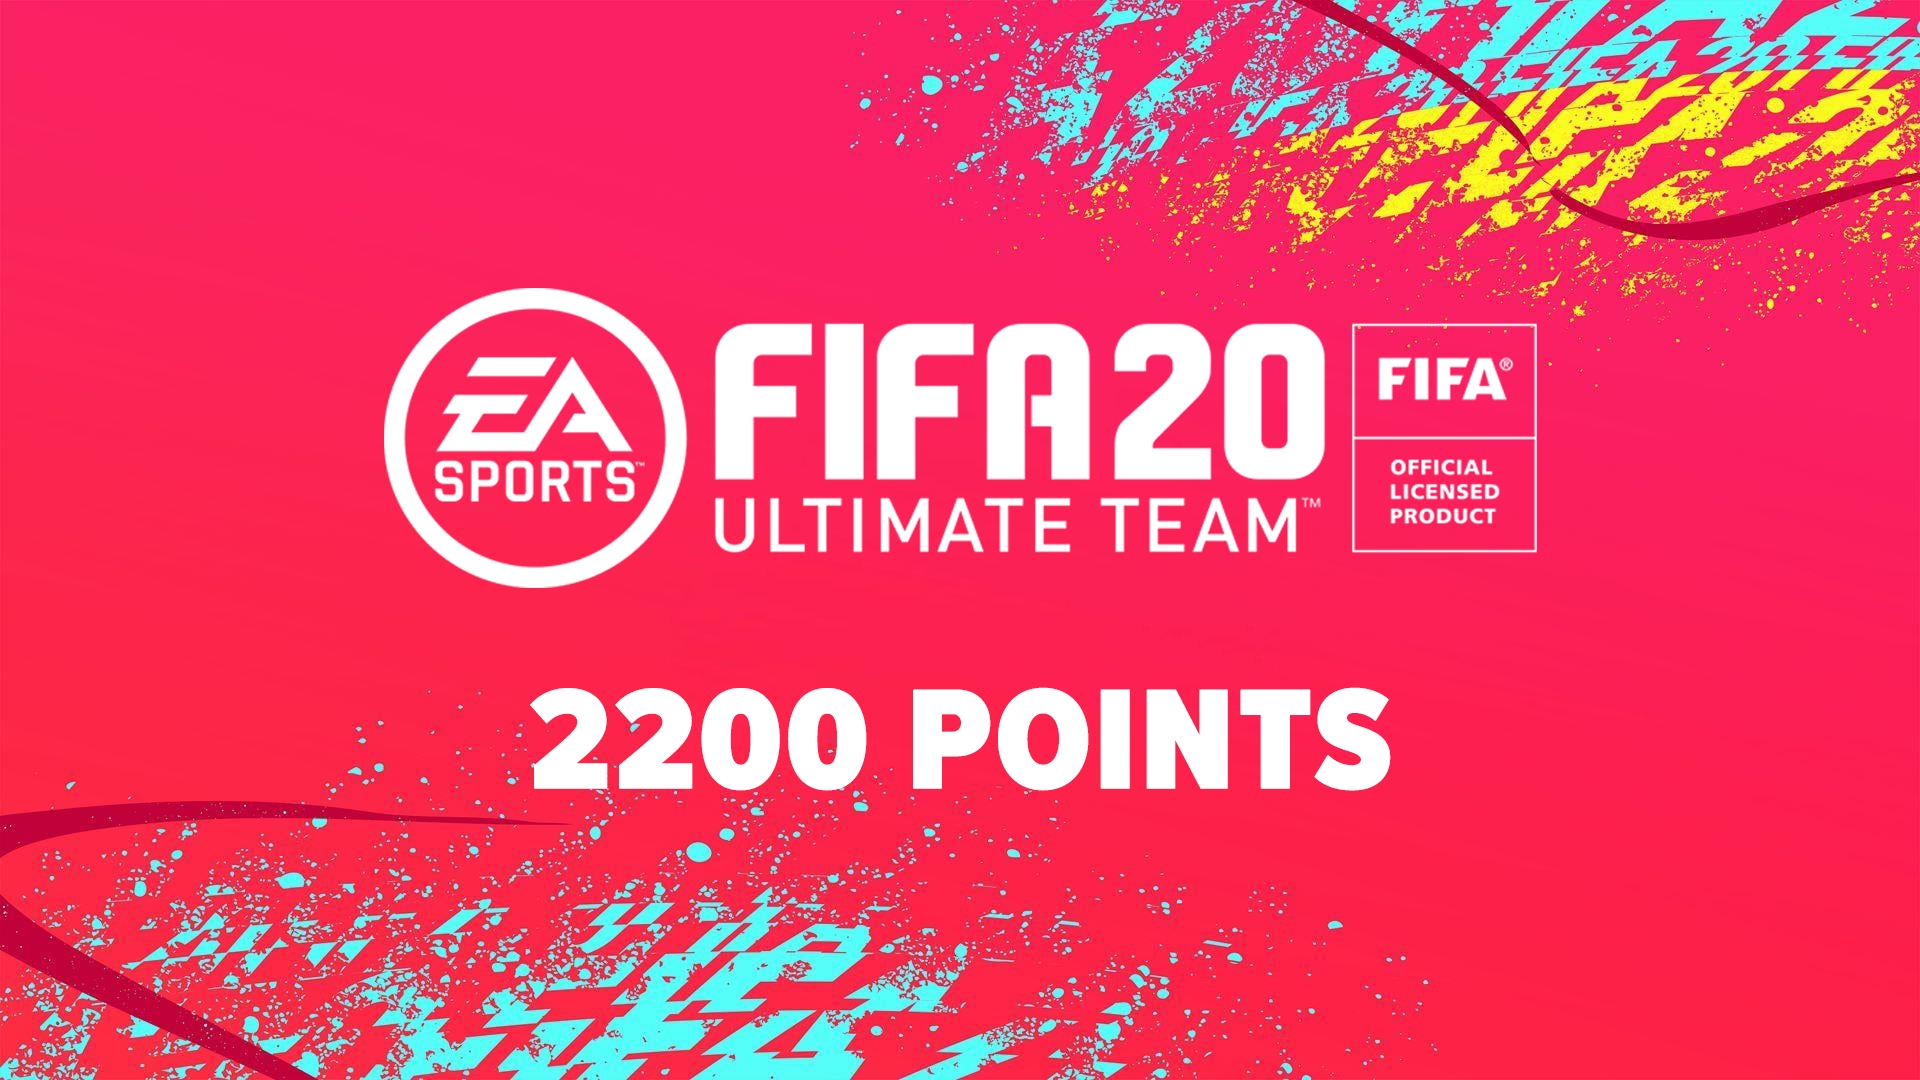 Comprar FIFA 21 2200 FUT Jogo para PC